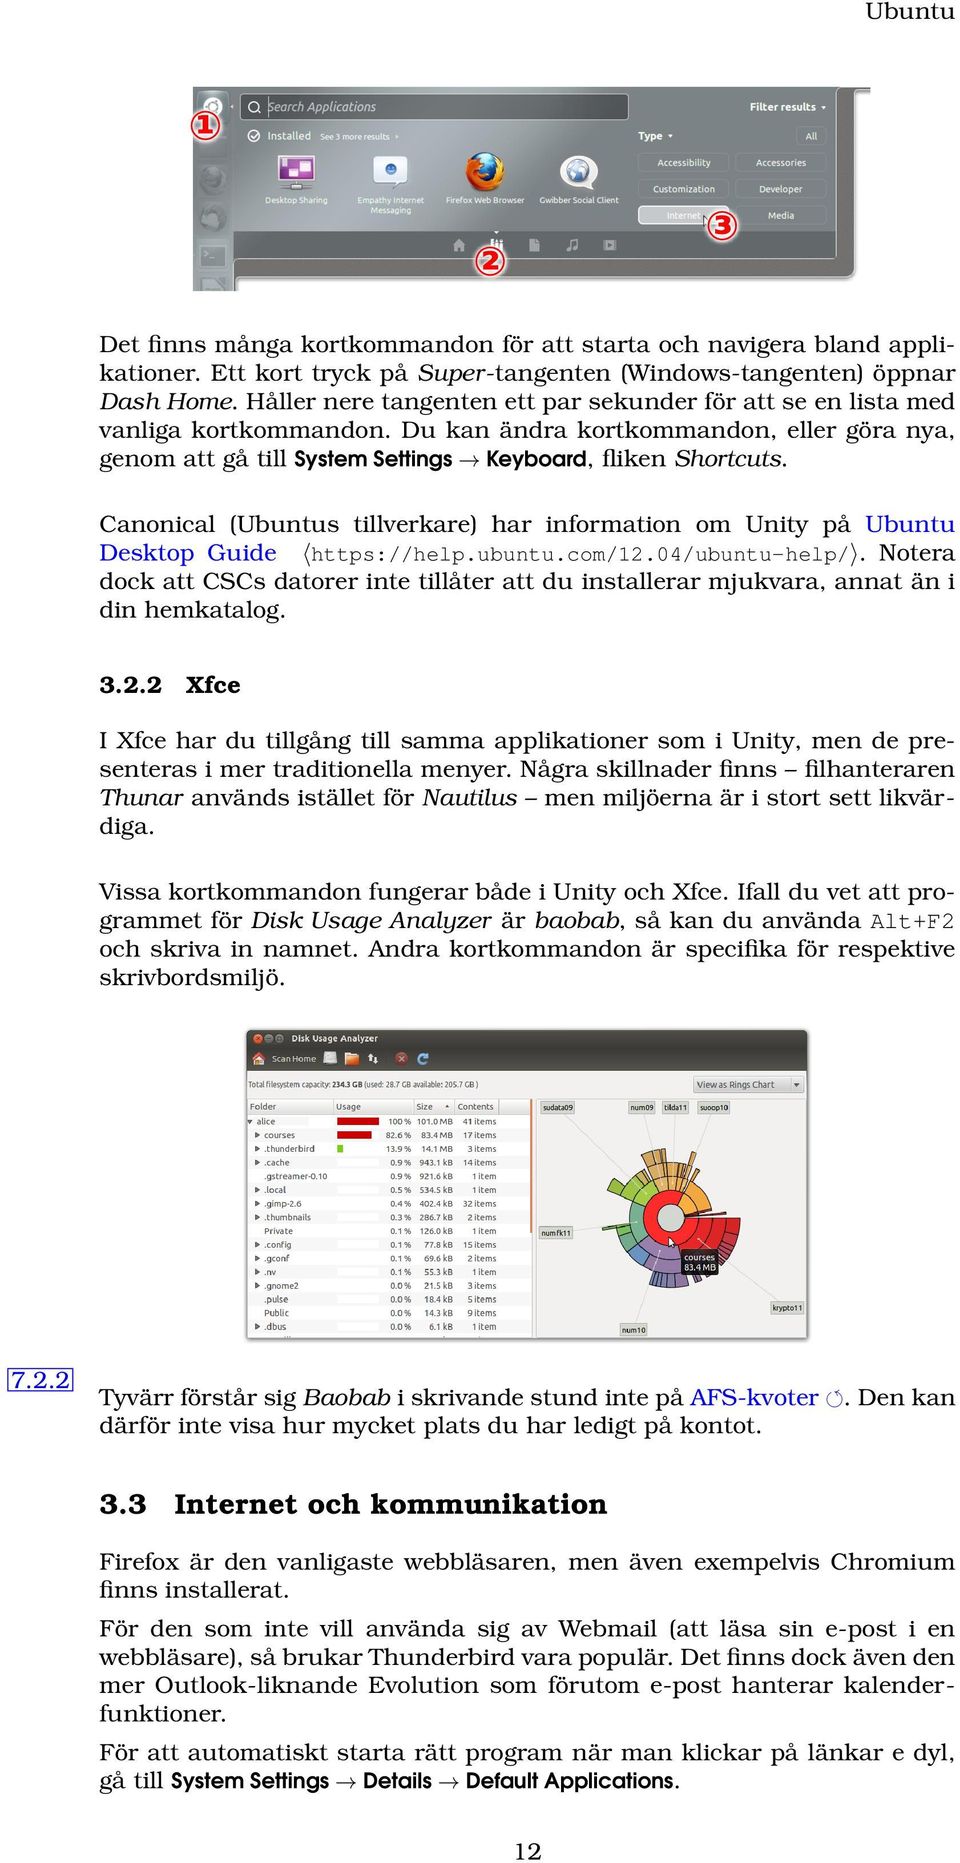 Canonical (Ubuntus tillverkare) har information om Unity på Ubuntu Desktop Guide https://help.ubuntu.com/12.04/ubuntu-help/.